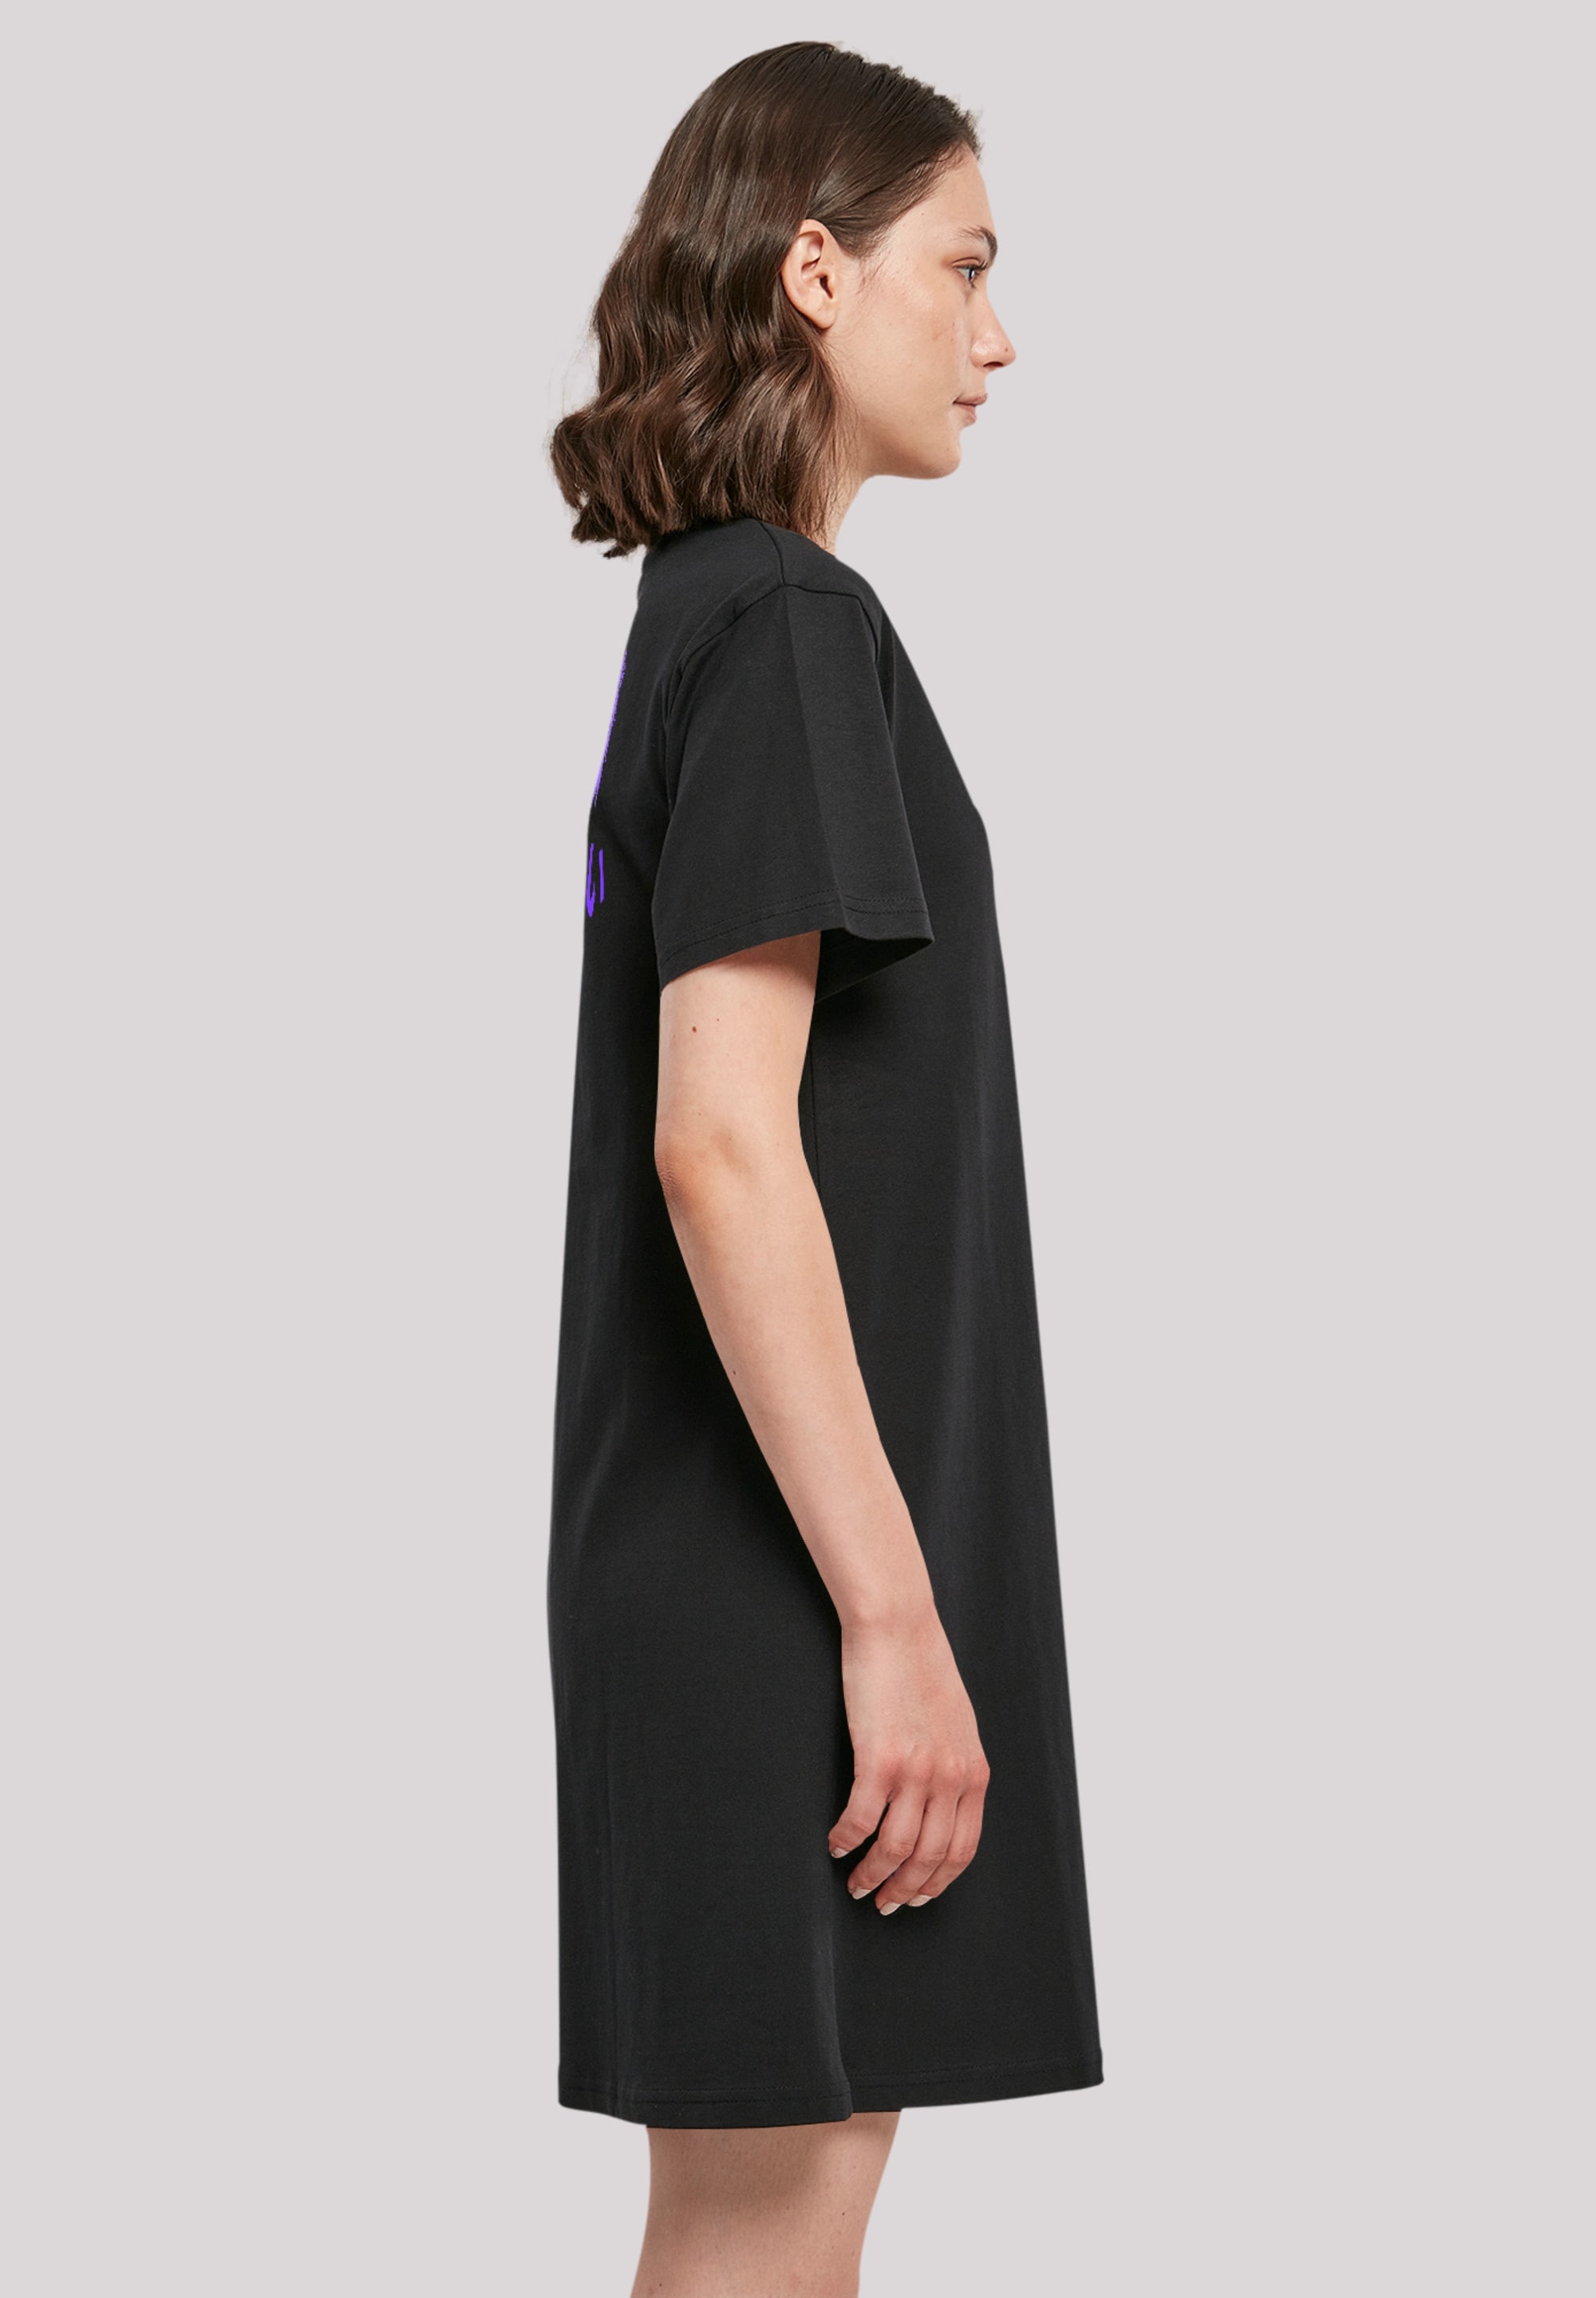 »Drache BAUR Print | F4NT4STIC Japan T-Shirt Shirtkleid Damen bestellen Kleid«,